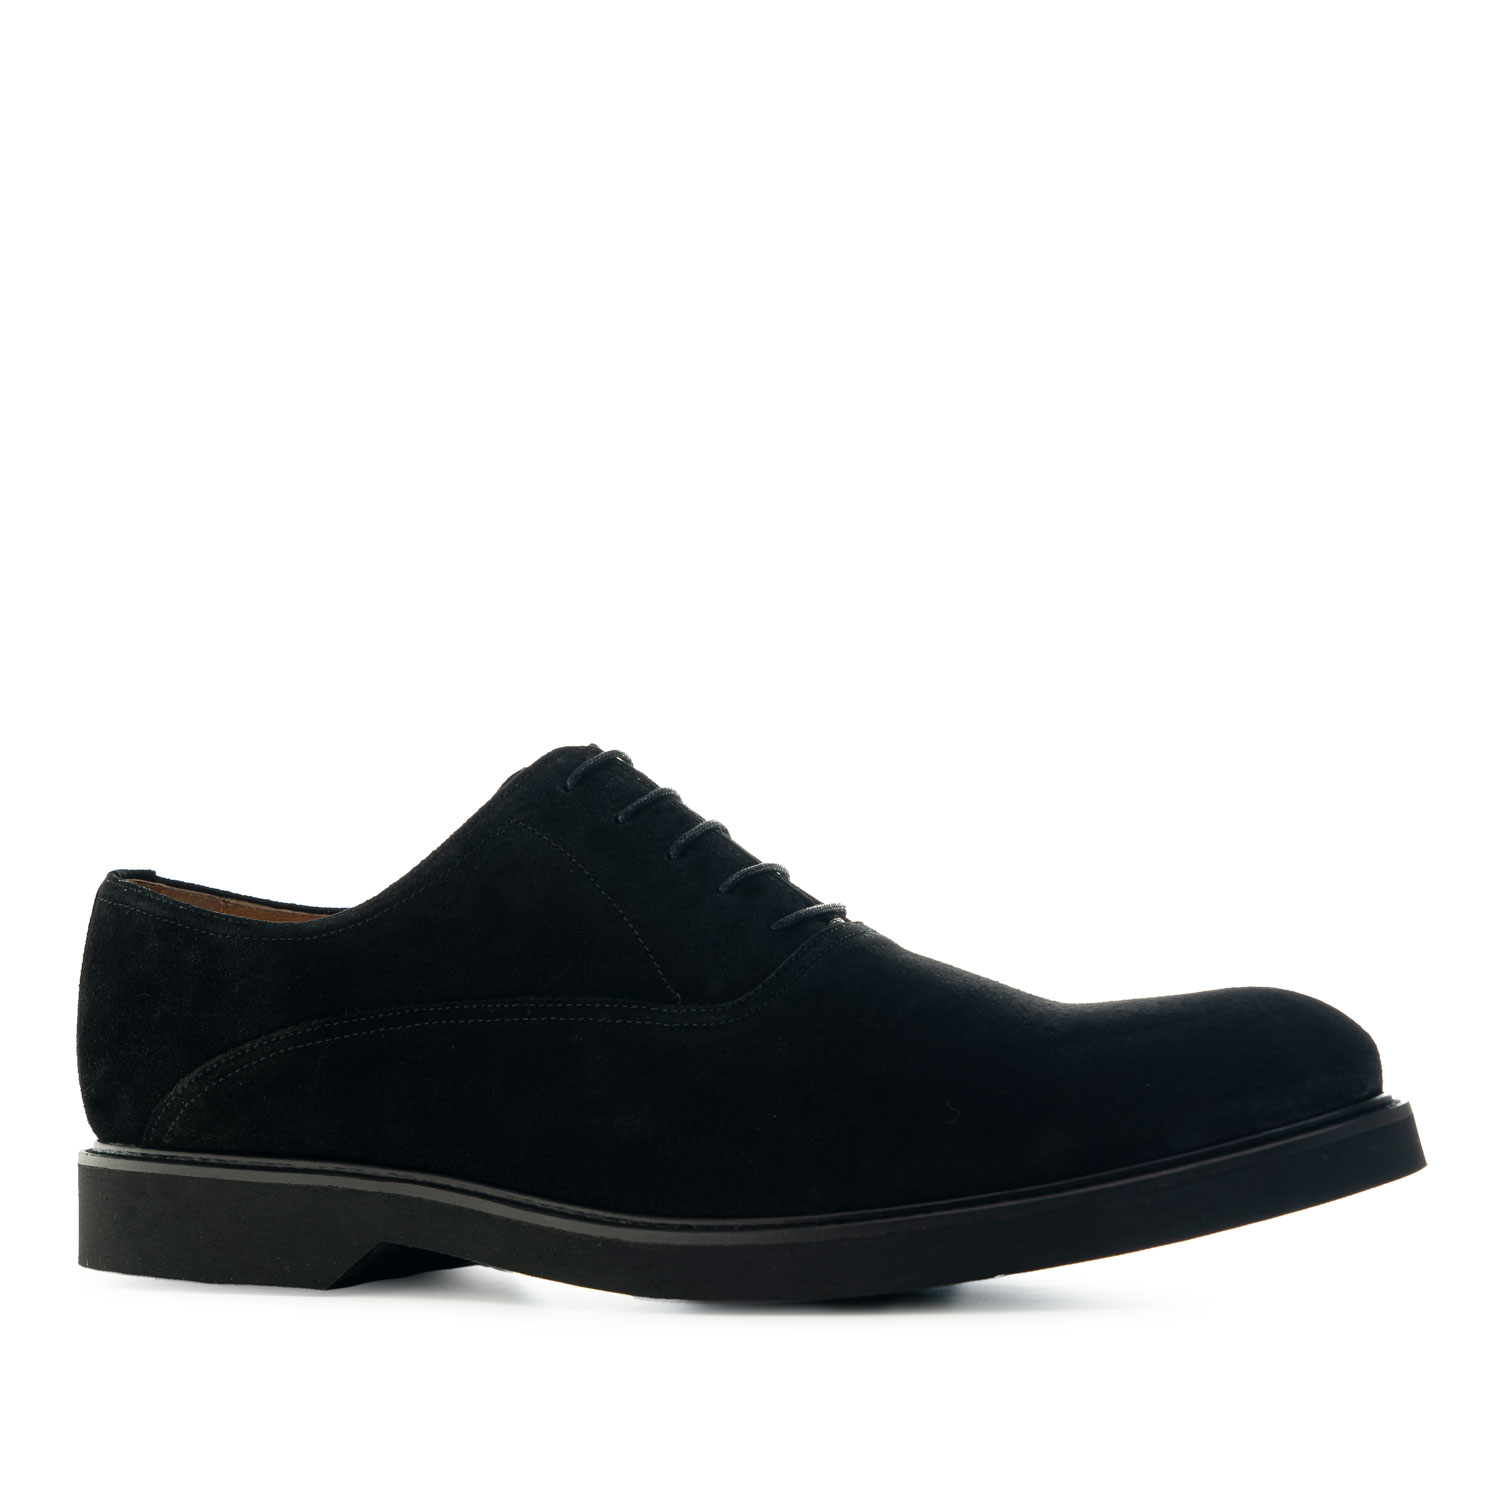 Dress Shoes for Men in Black Split leather 